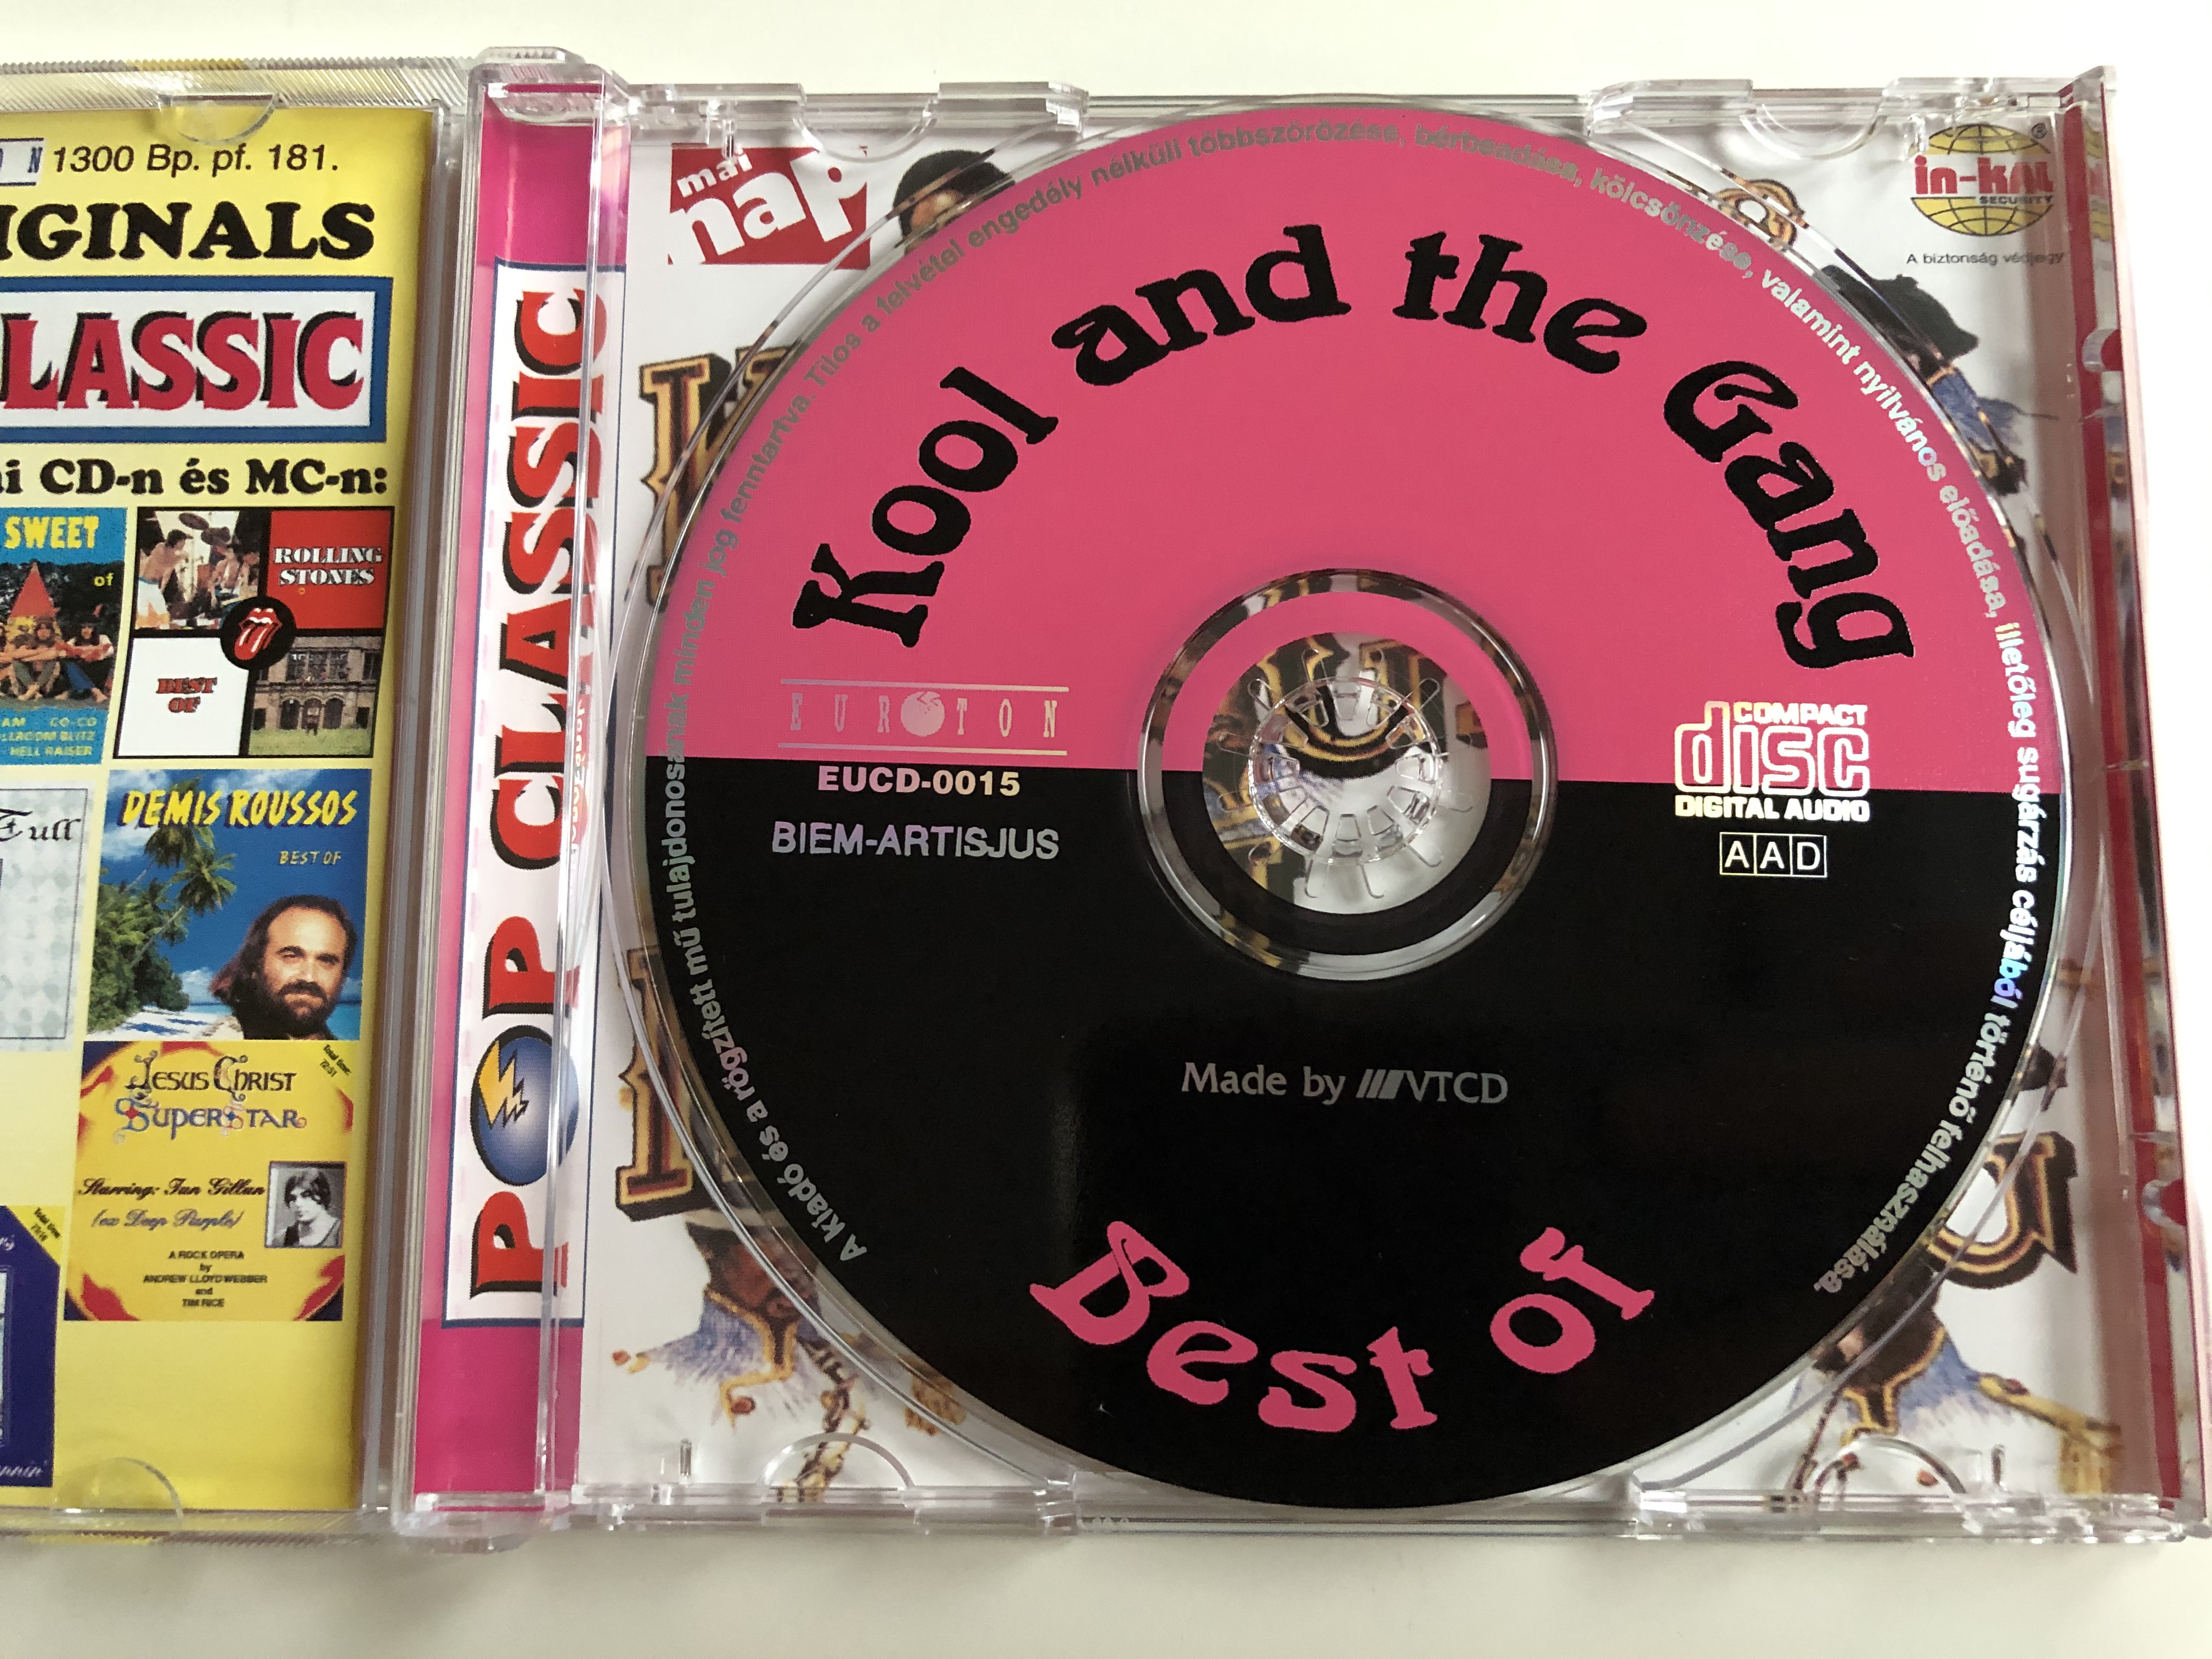 kool-and-the-gang-best-of-pop-classic-euroton-audio-cd-eucd-0015-2-.jpg